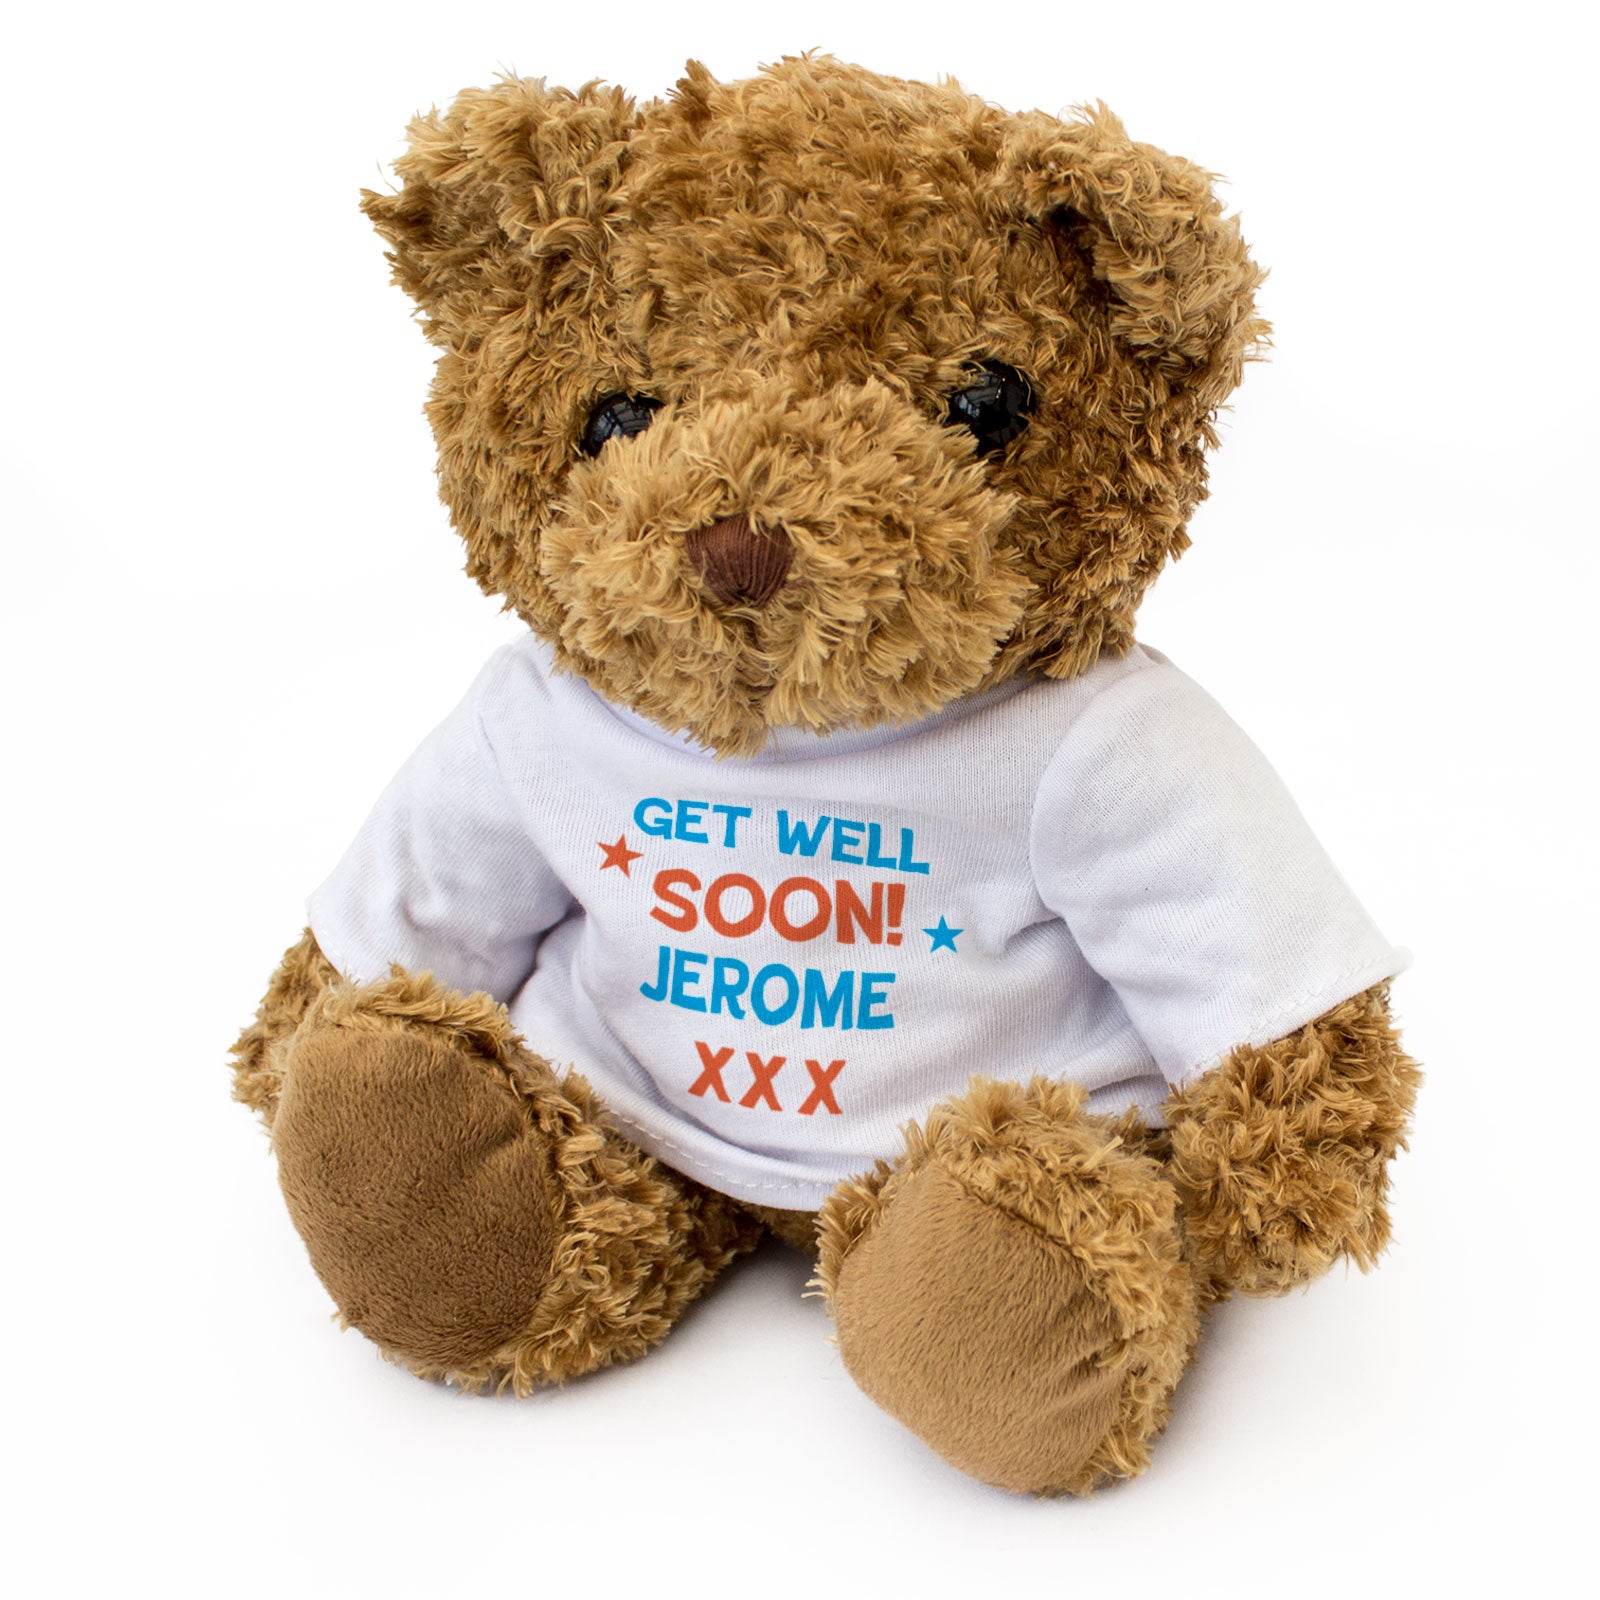 Get Well Soon Jerome - Teddy Bear